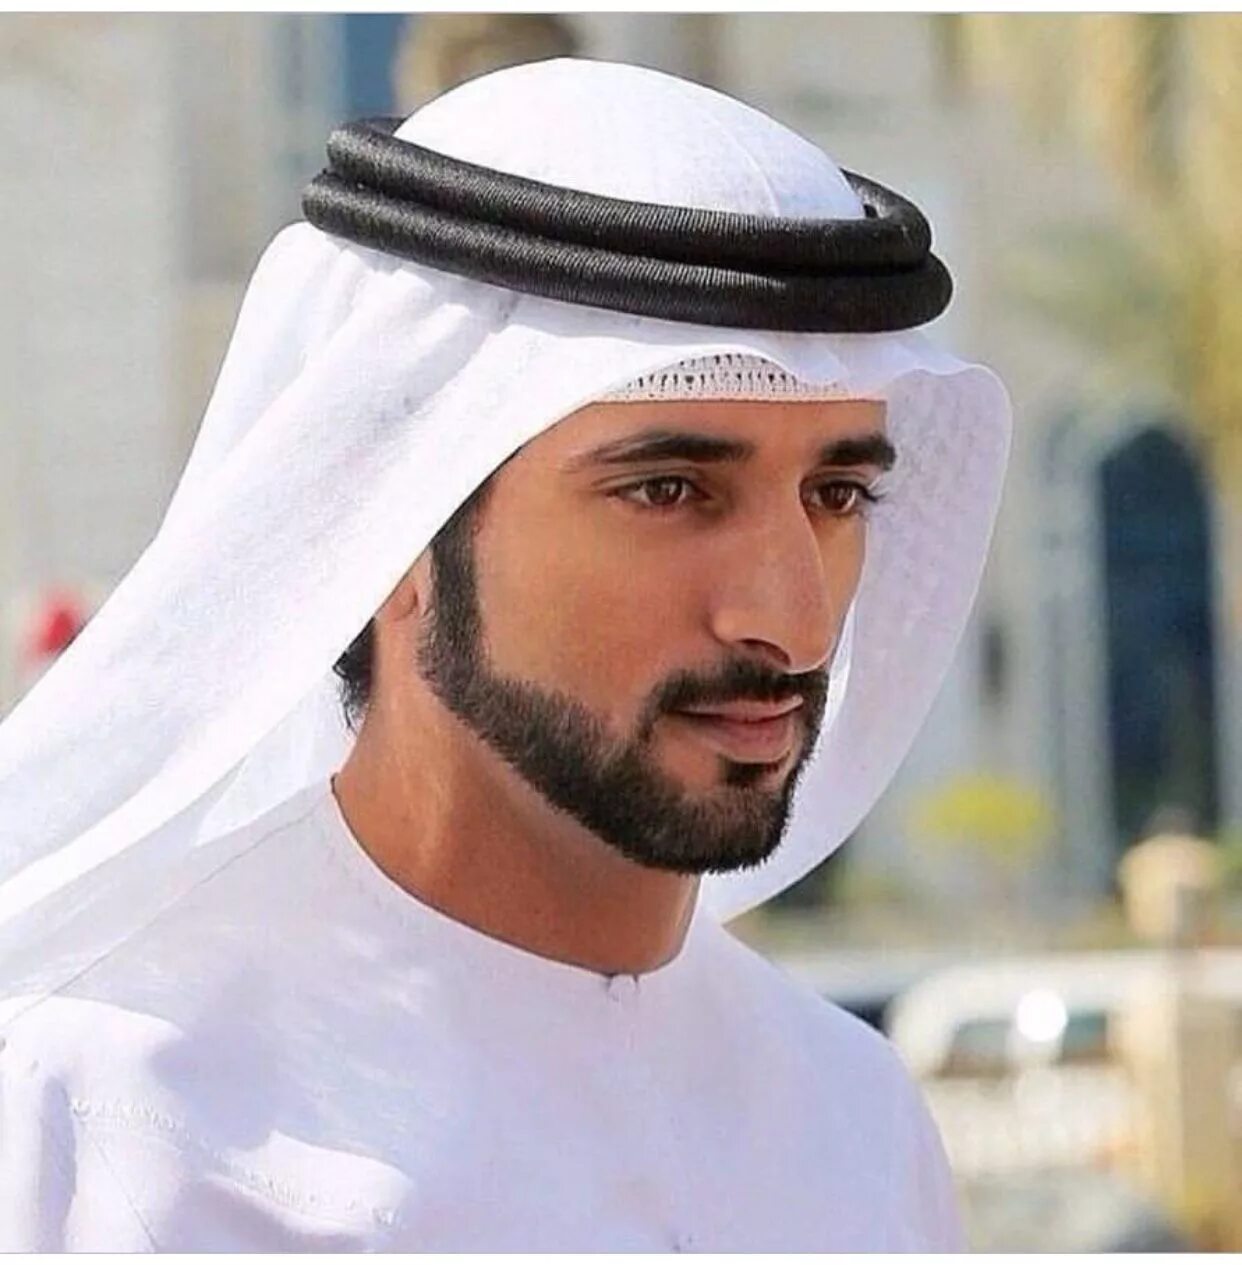 Дубайский шейх. Наследный принц Дубая. Шейх Дубая Хамдан. Эмиратский принц Хамдан.